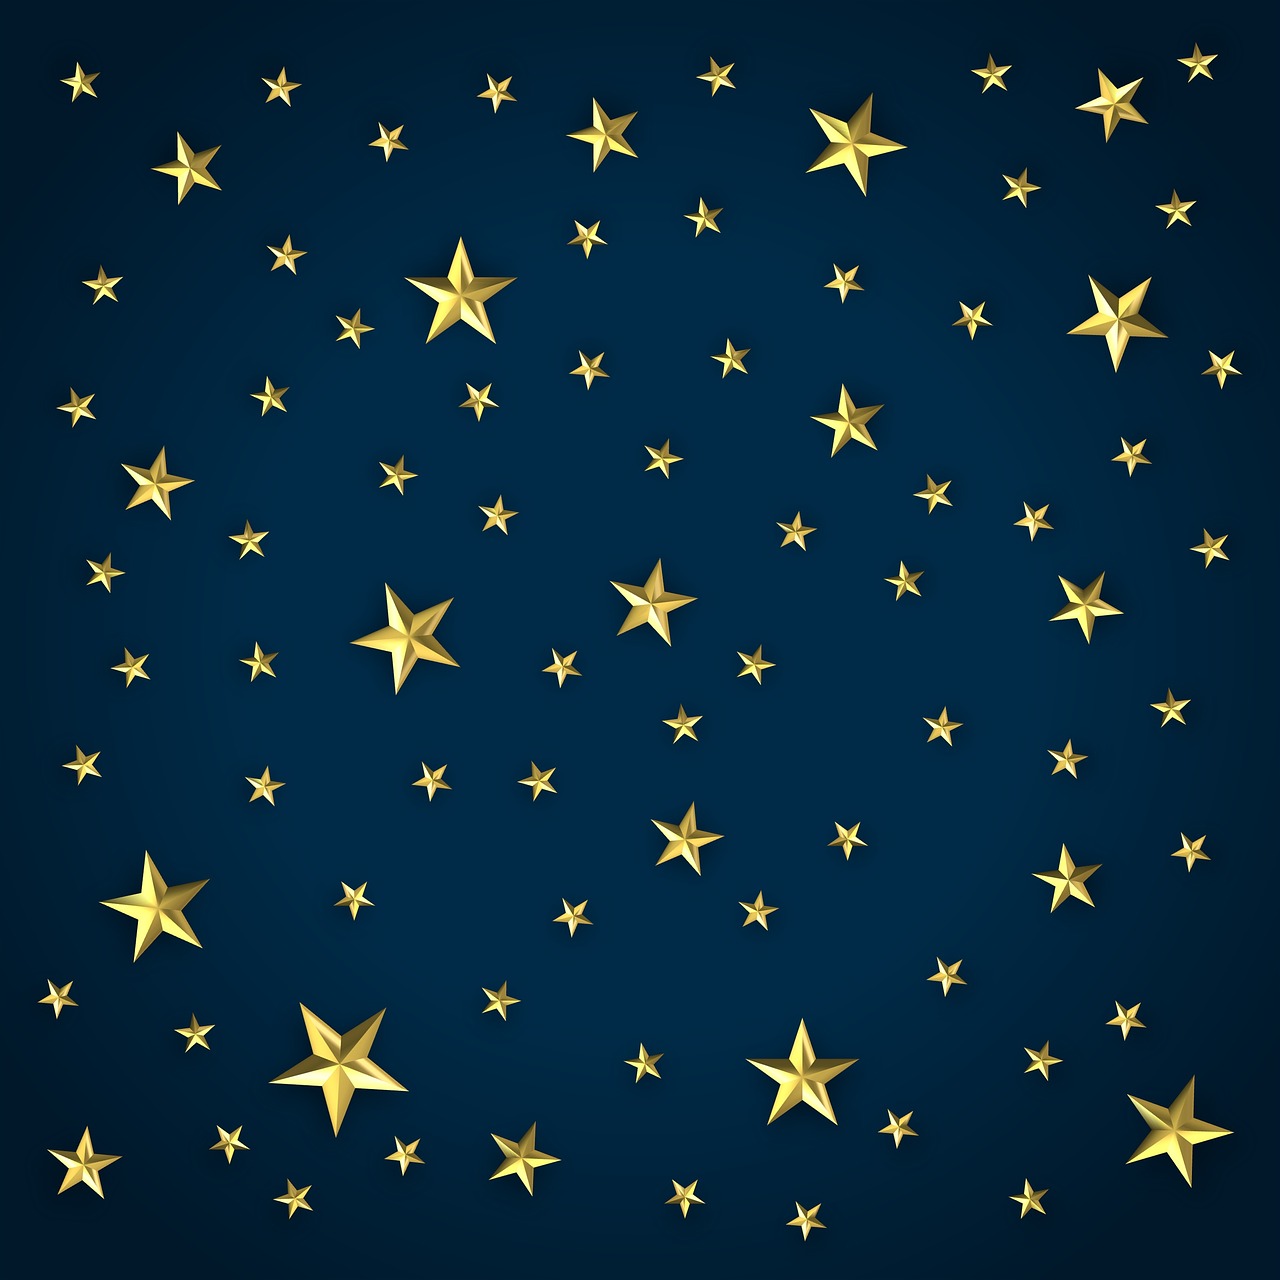 stars night sky free photo